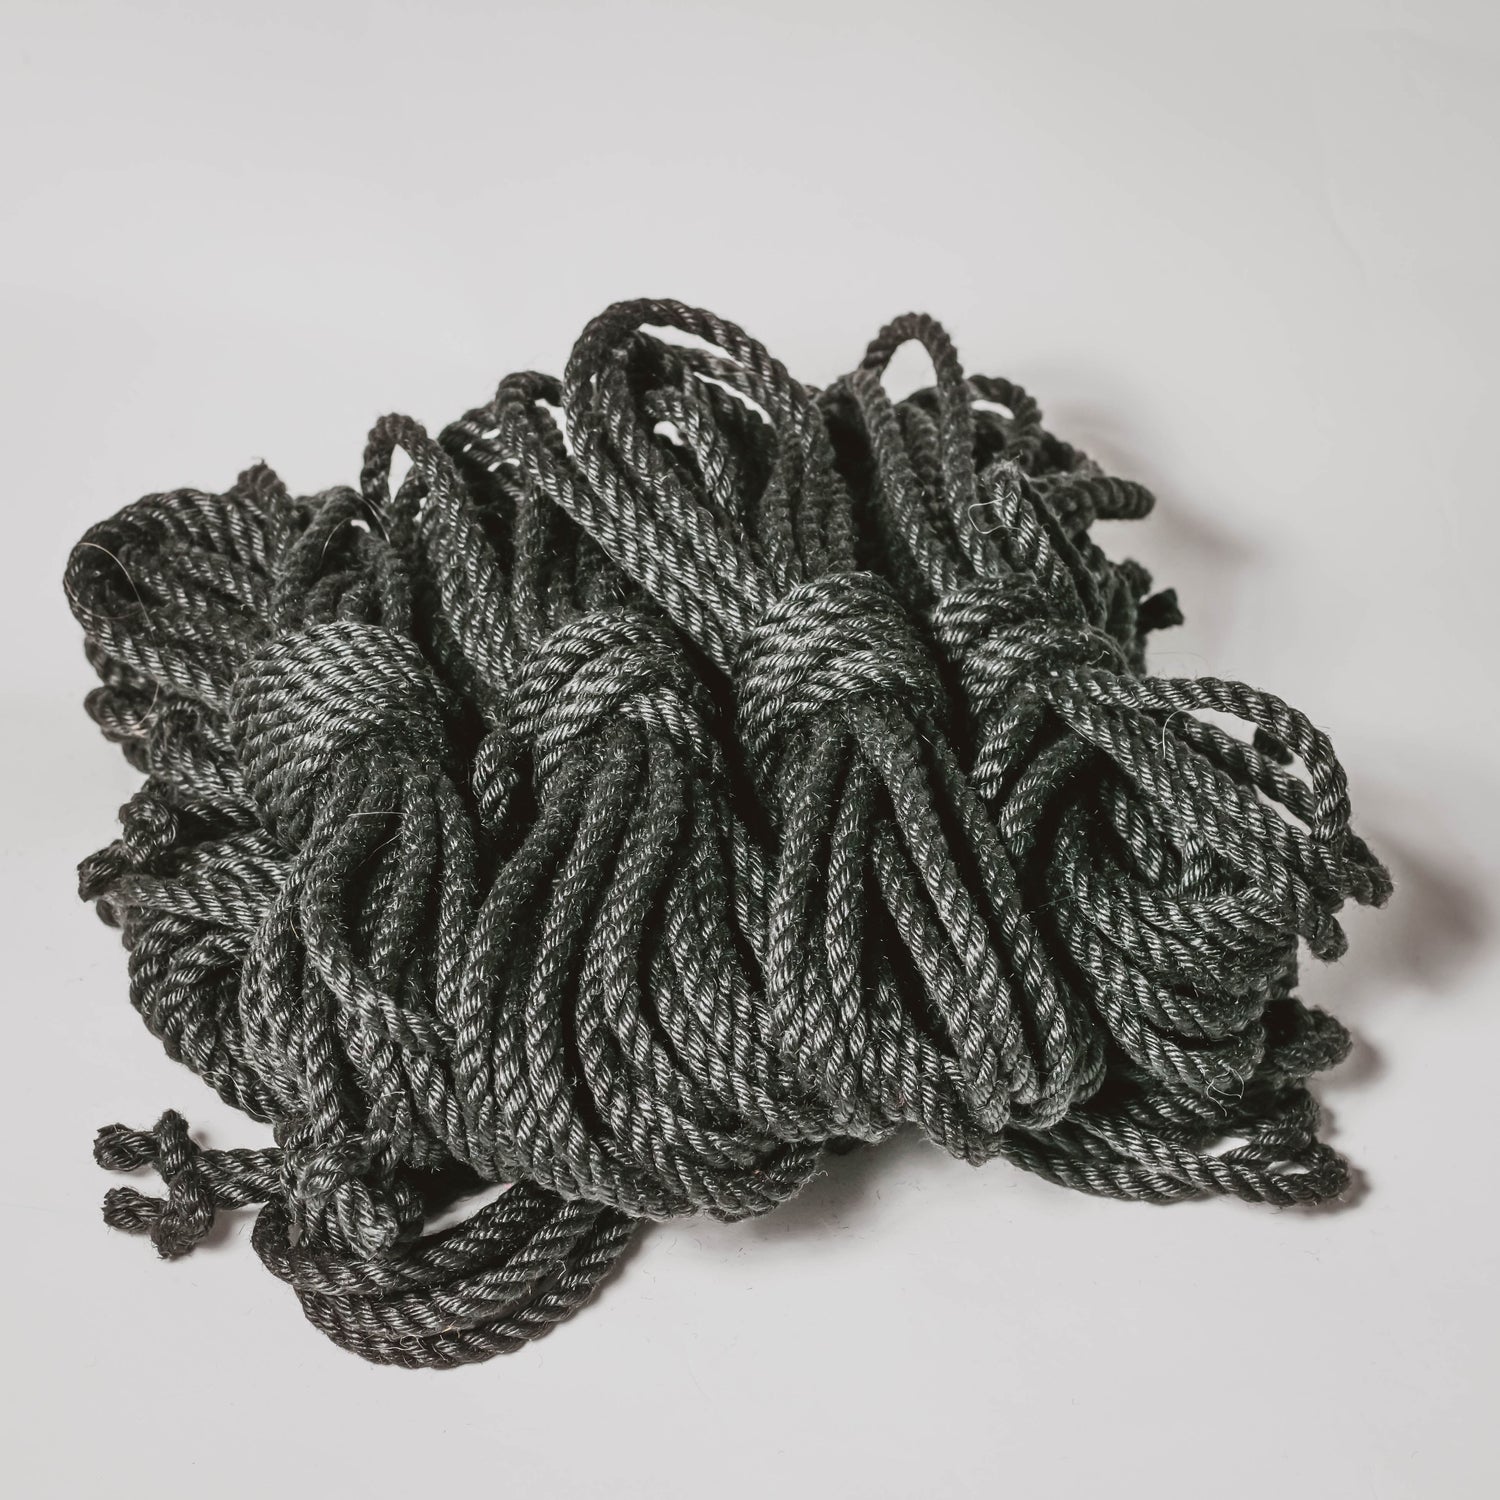 Black rope (treated, 6mm) Shibari Rope Bundle of 8 